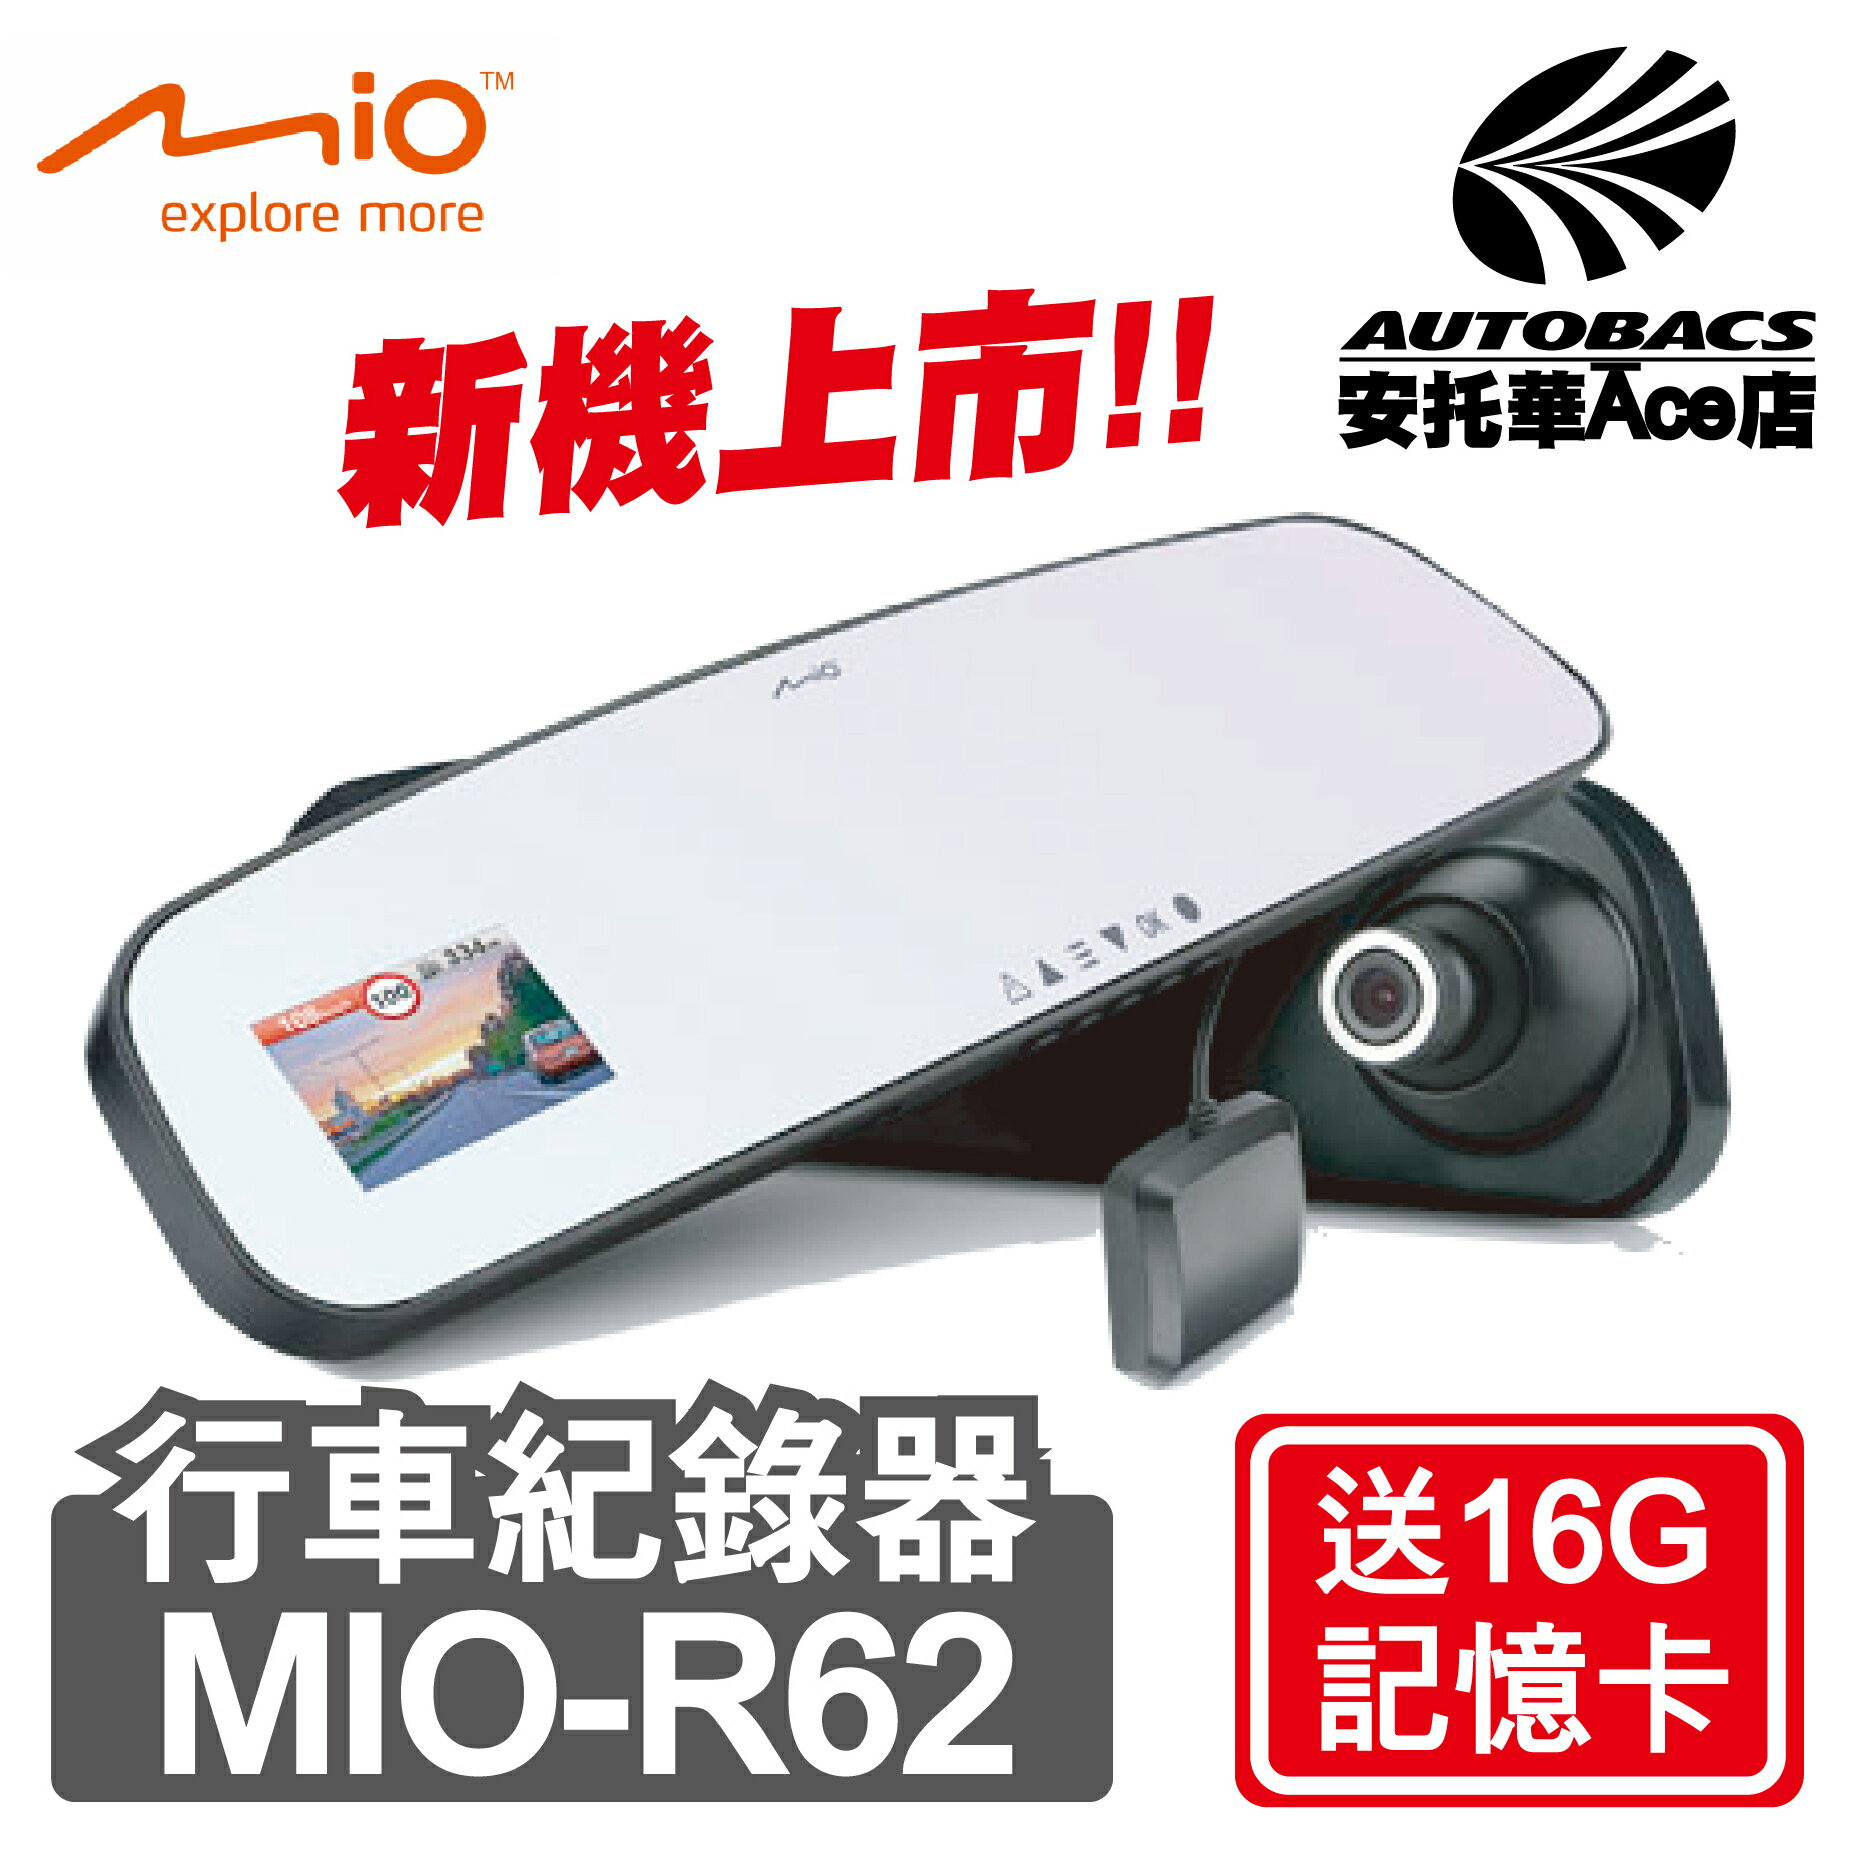 【Ace店限量品】Mio MiVue™ R62 GPS 後視鏡行車記錄器 送16G記憶卡 (4713264280823)